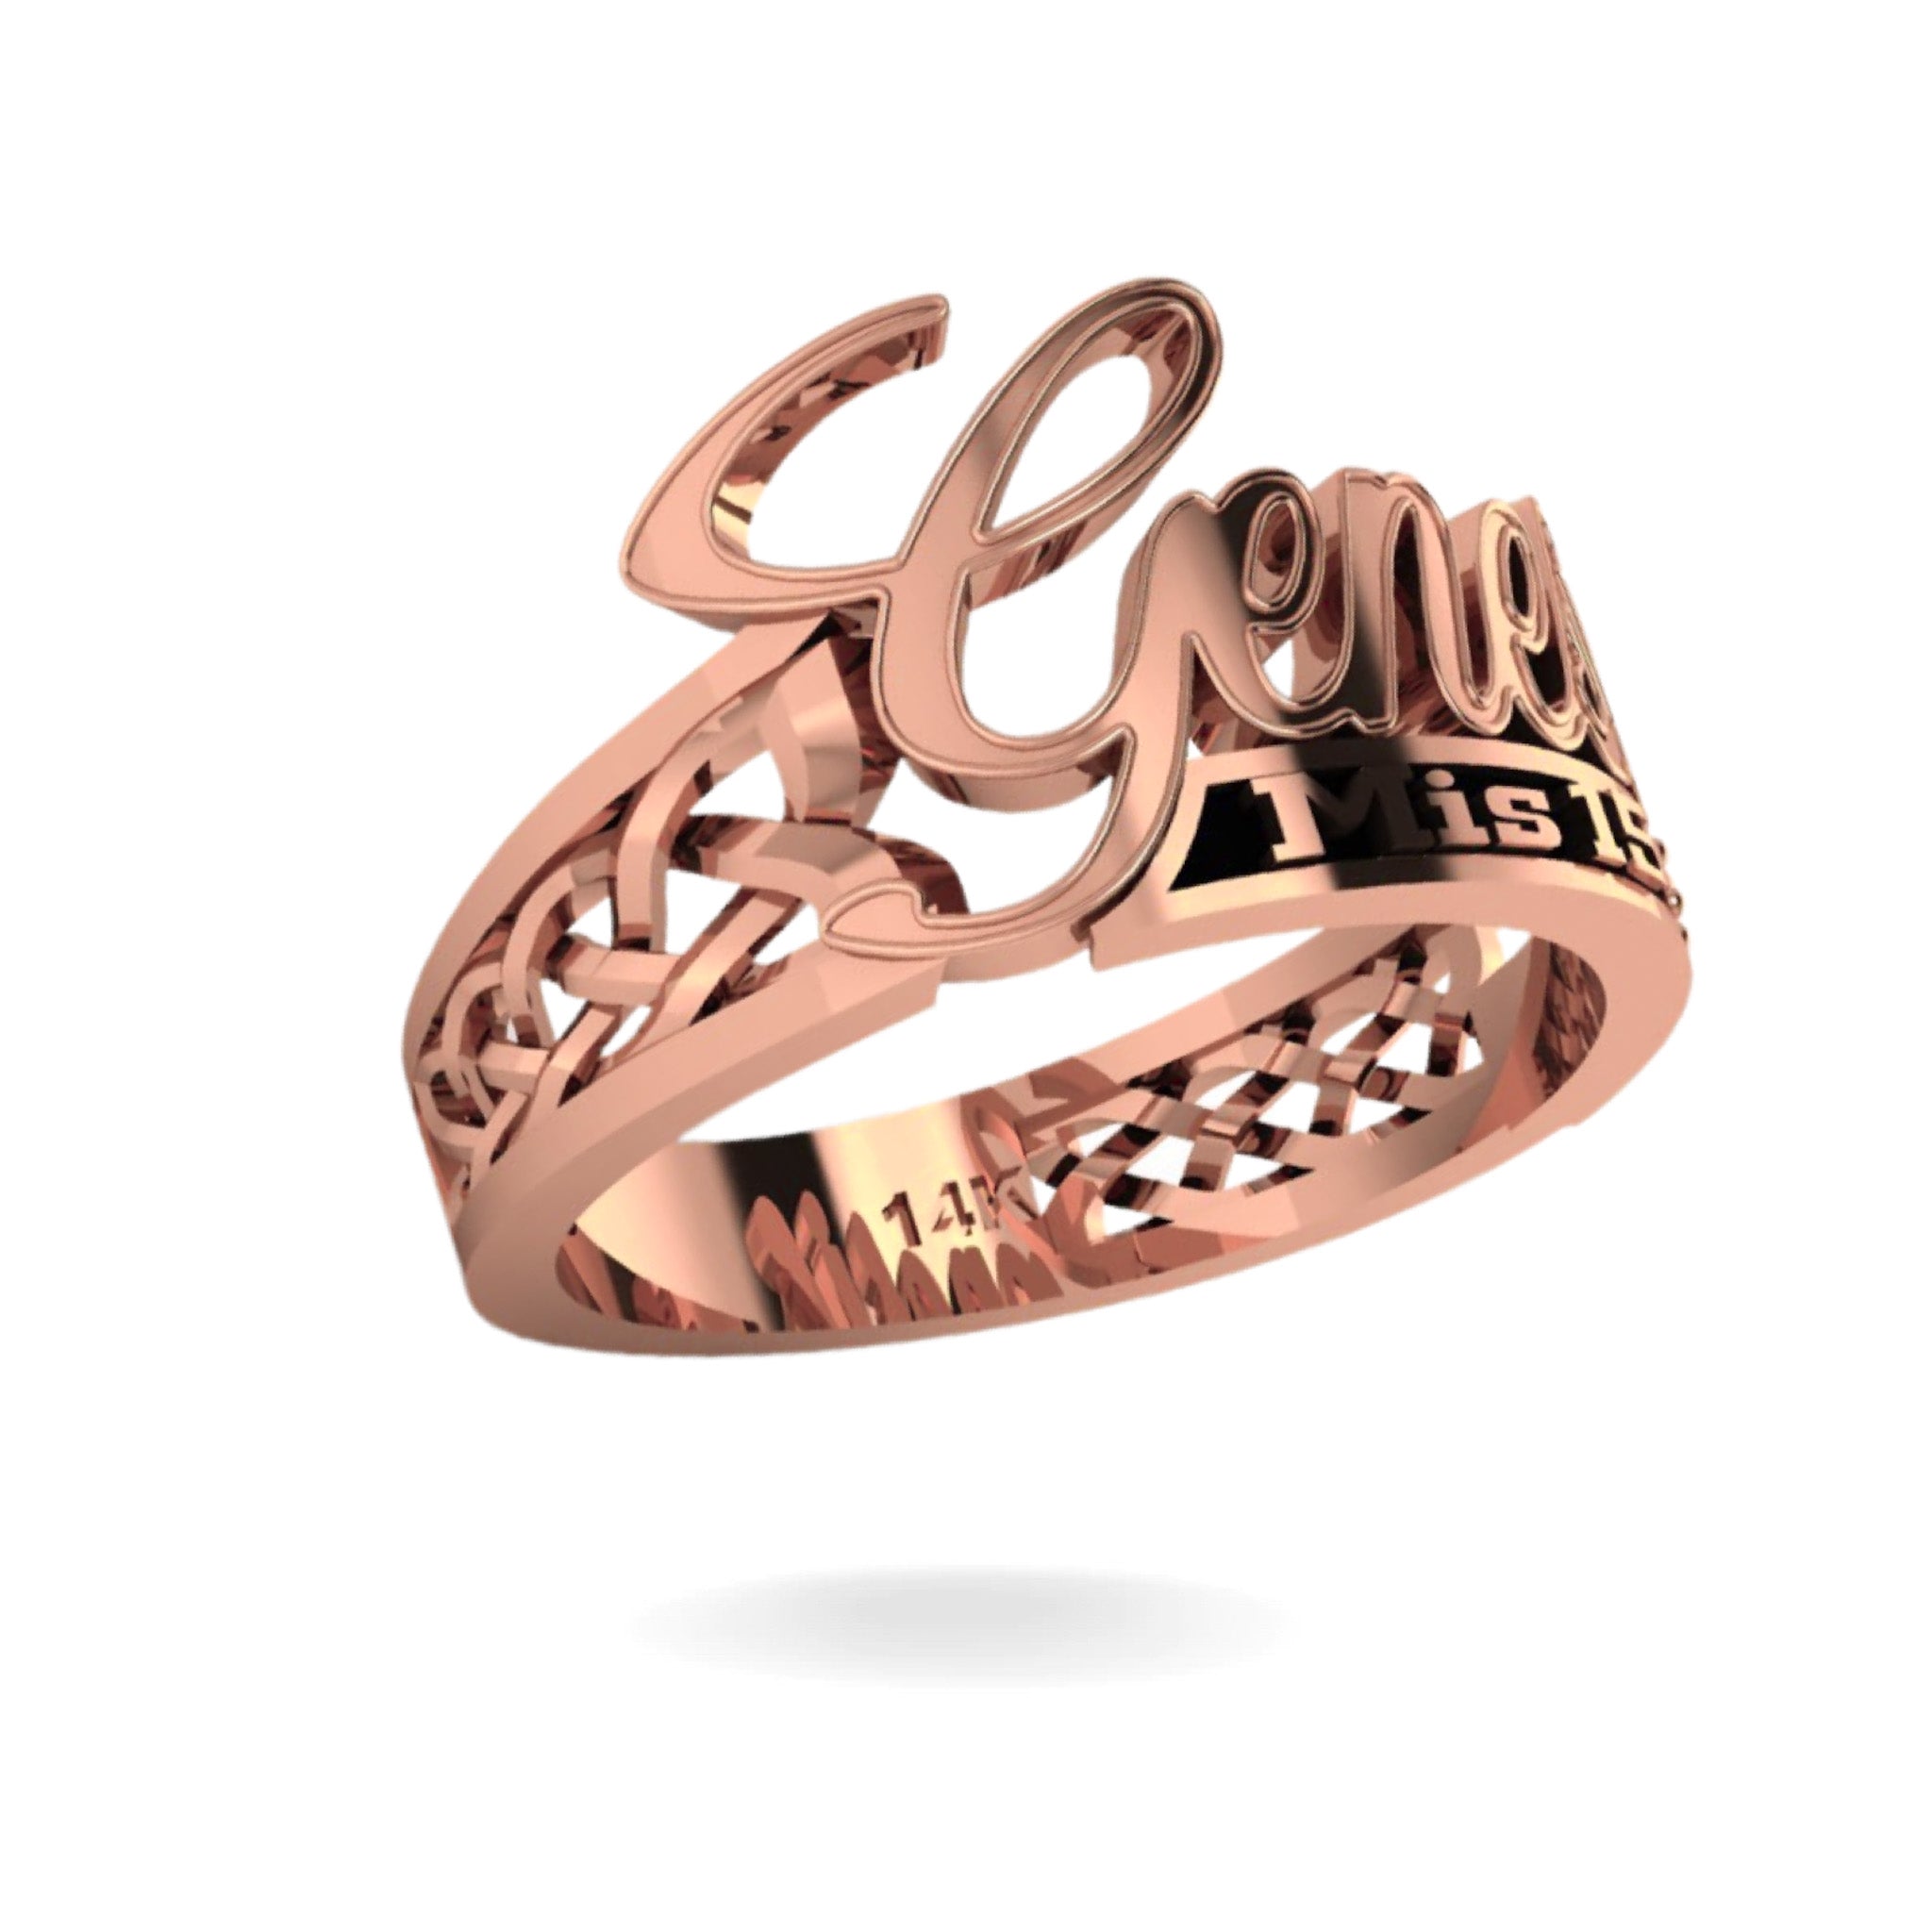 Margeaux Custom Ring in Gold Vermeil - MYKA